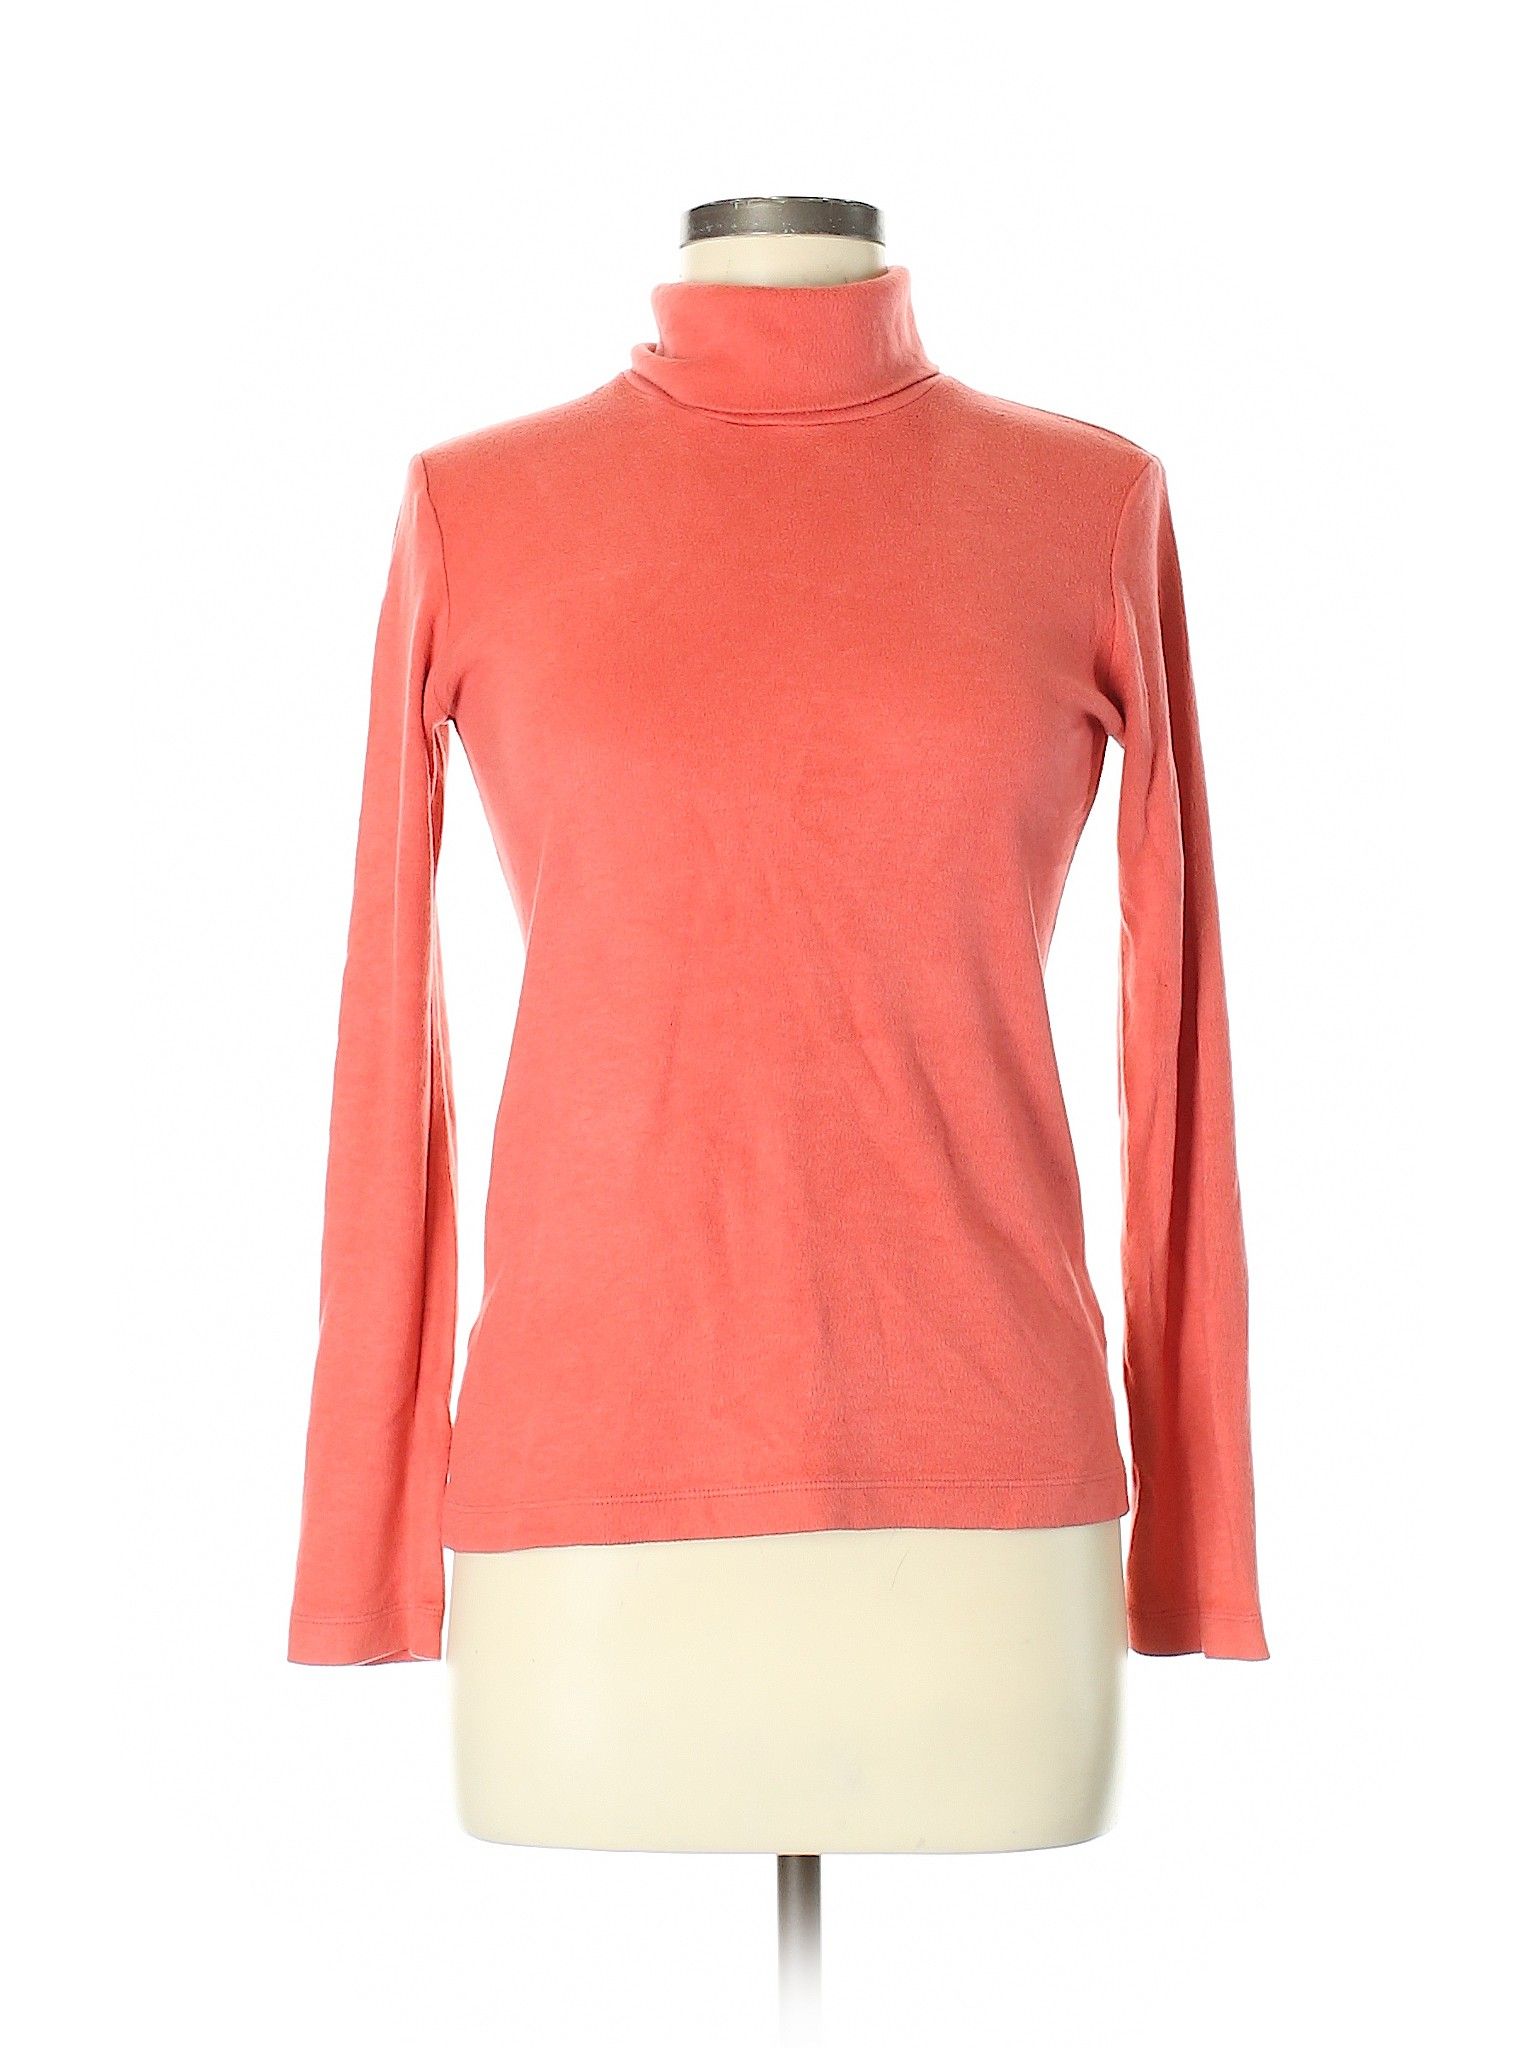 Uniqlo Turtleneck Sweater Size 8: Coral Women's Tops - 43837598 | thredUP